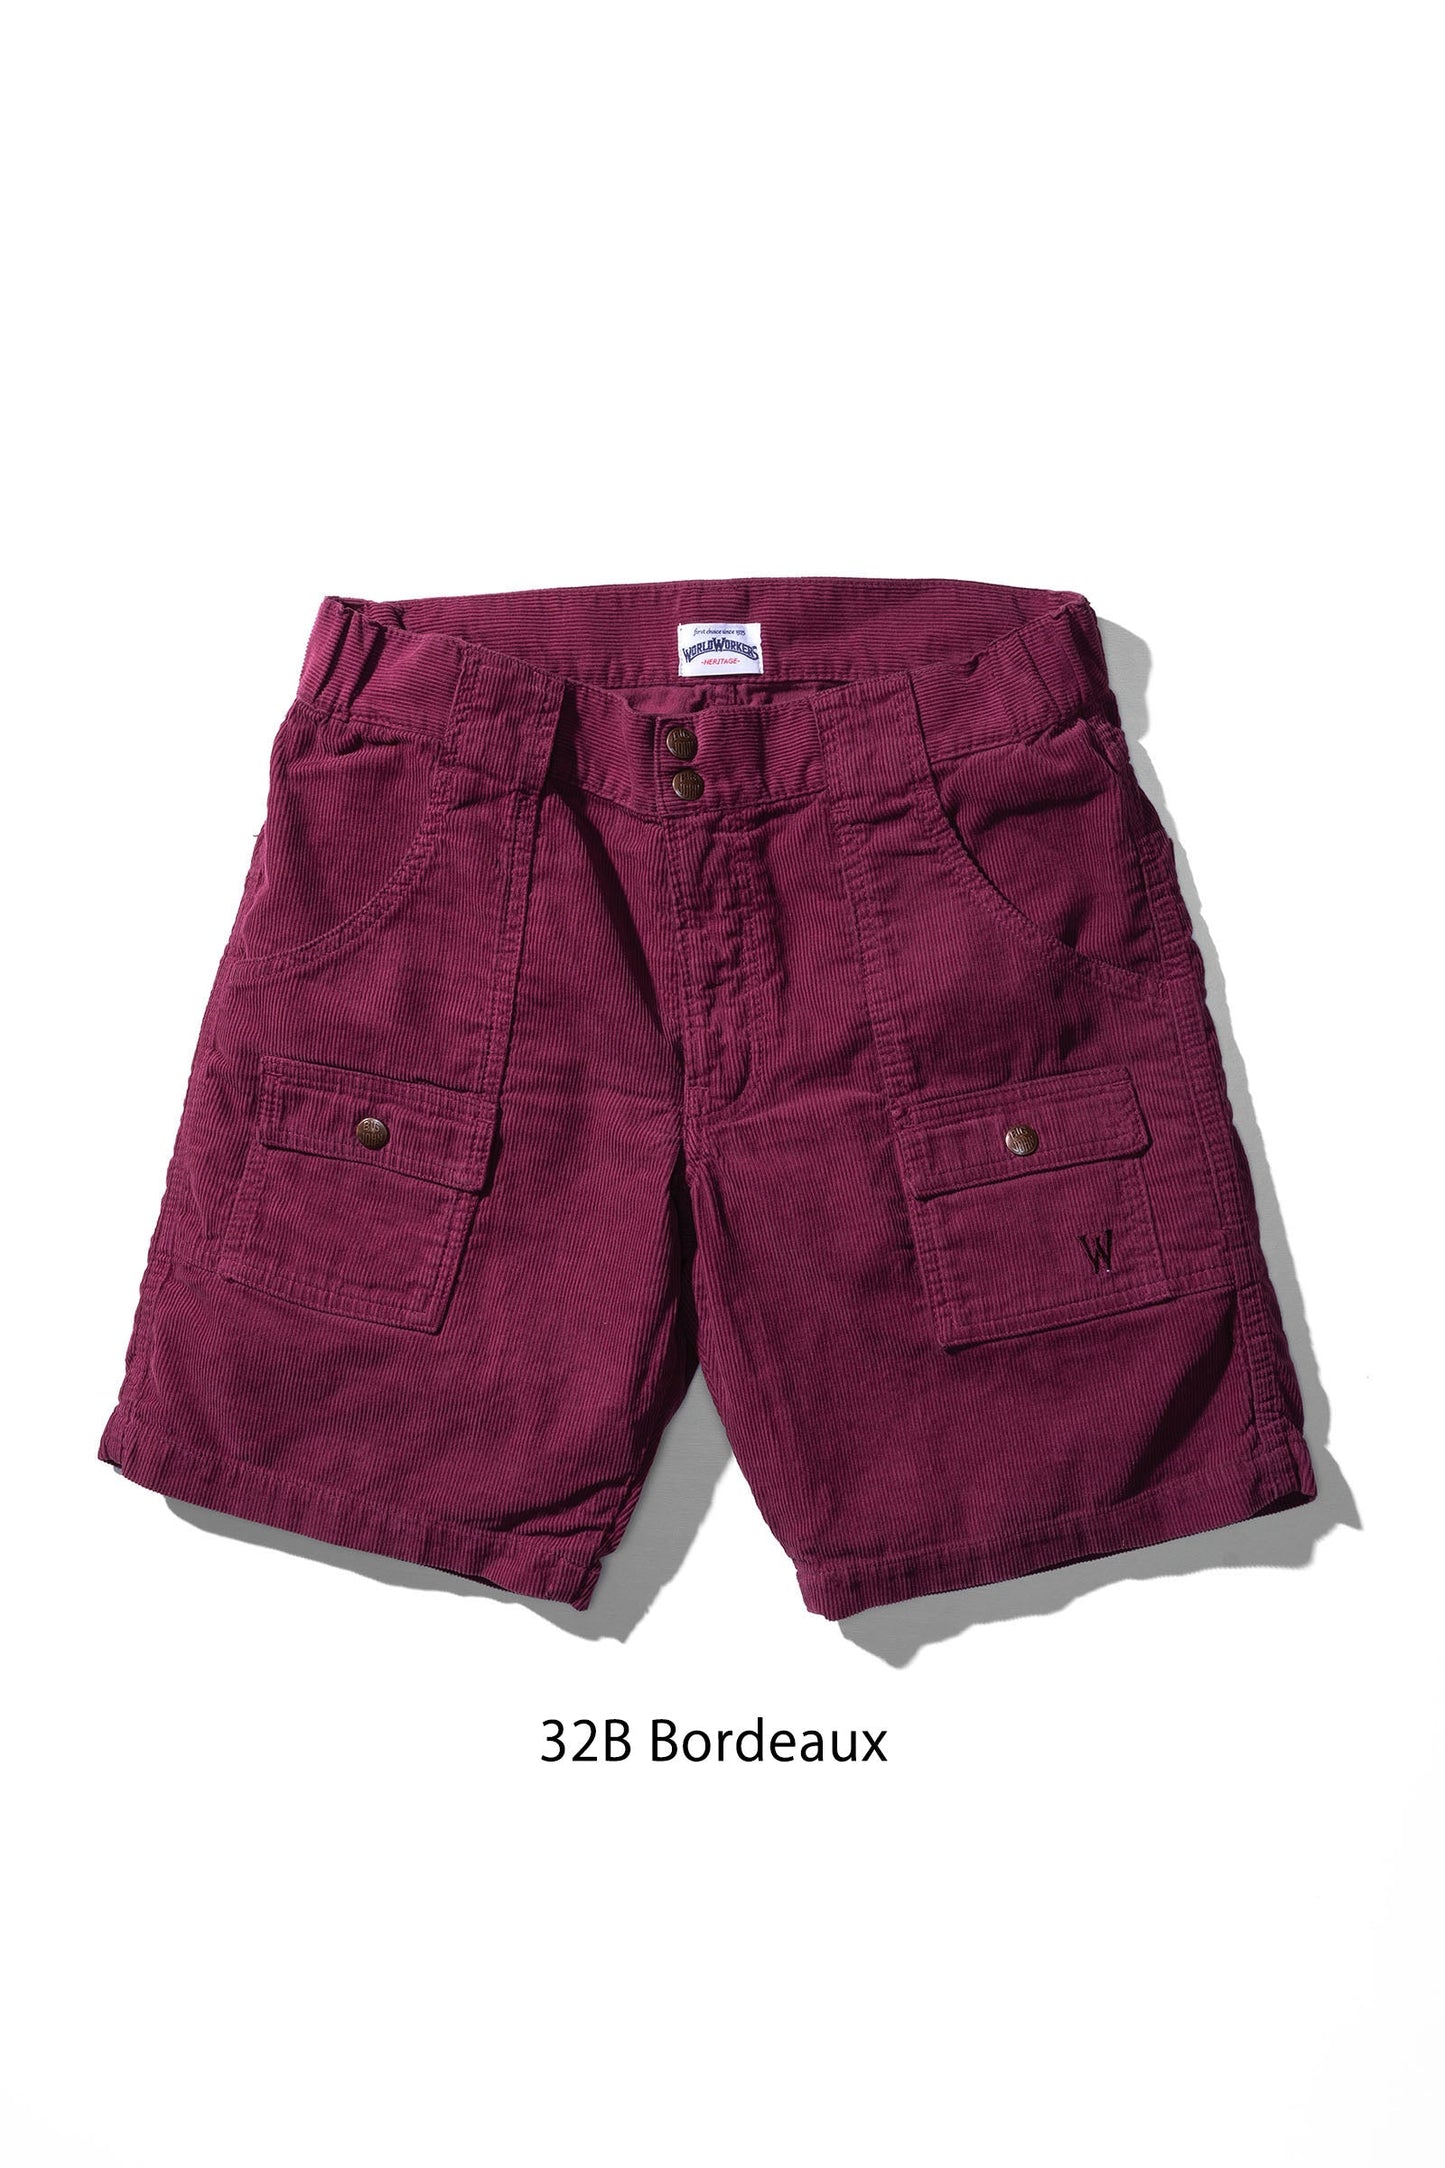 Purple/Sand Two Tone Corduroy Shorts